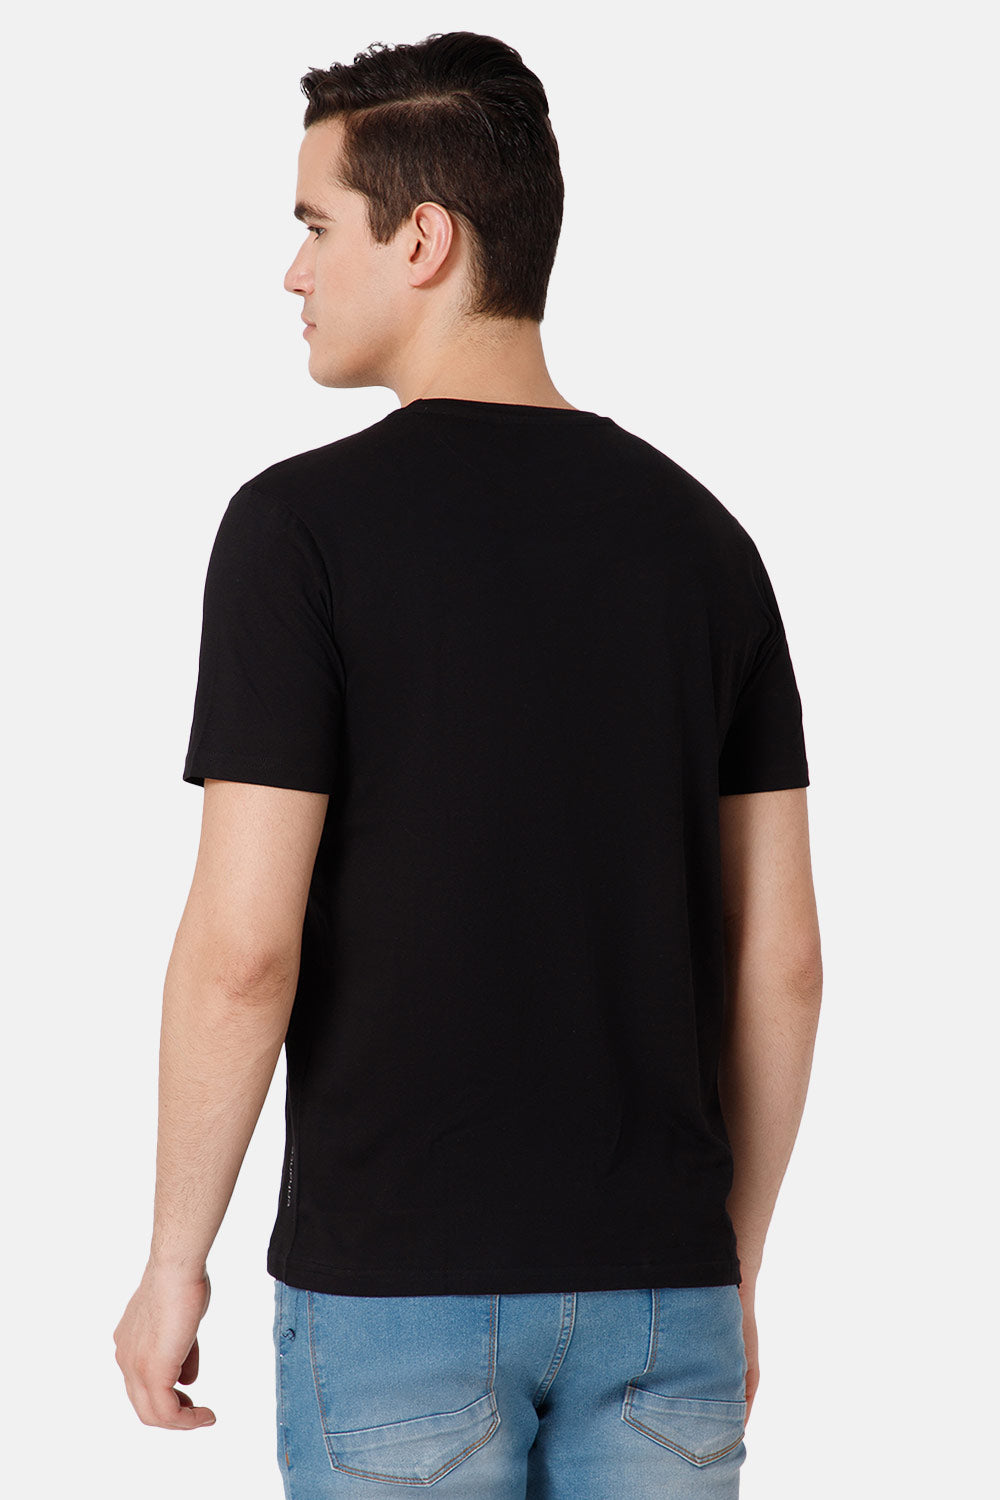 Enhance Printed Crew Neck Men's Casual T-Shirts - Black - TS36